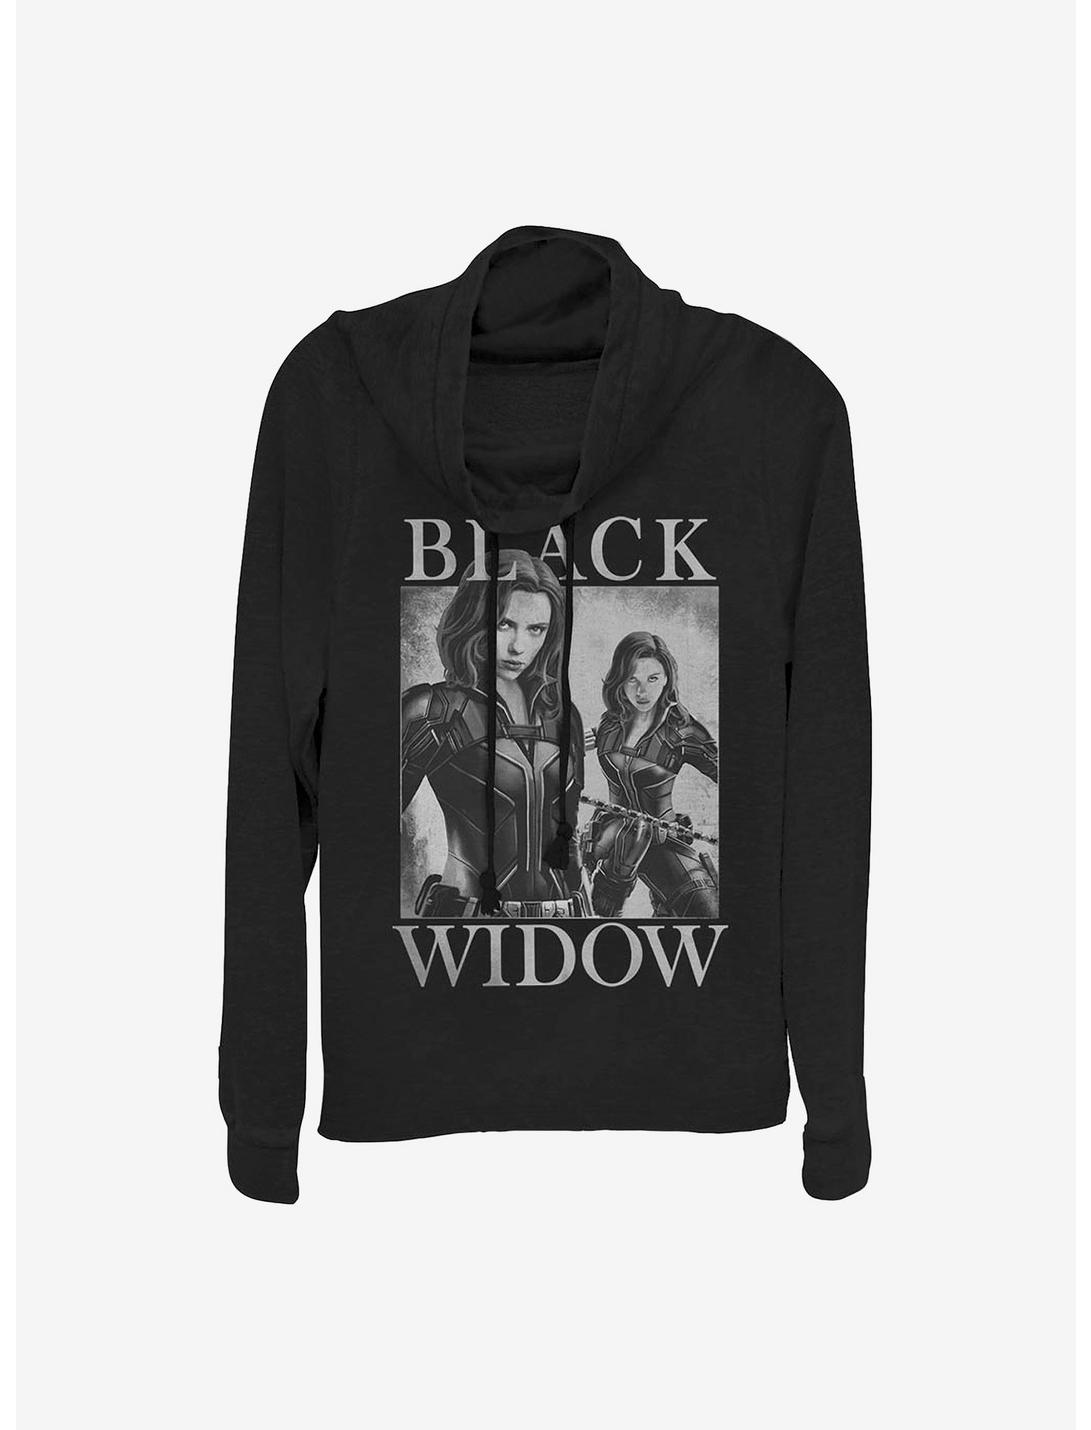 Marvel Black Widow Two Widows Mirror Cowlneck Long-Sleeve Girls Top, BLACK, hi-res